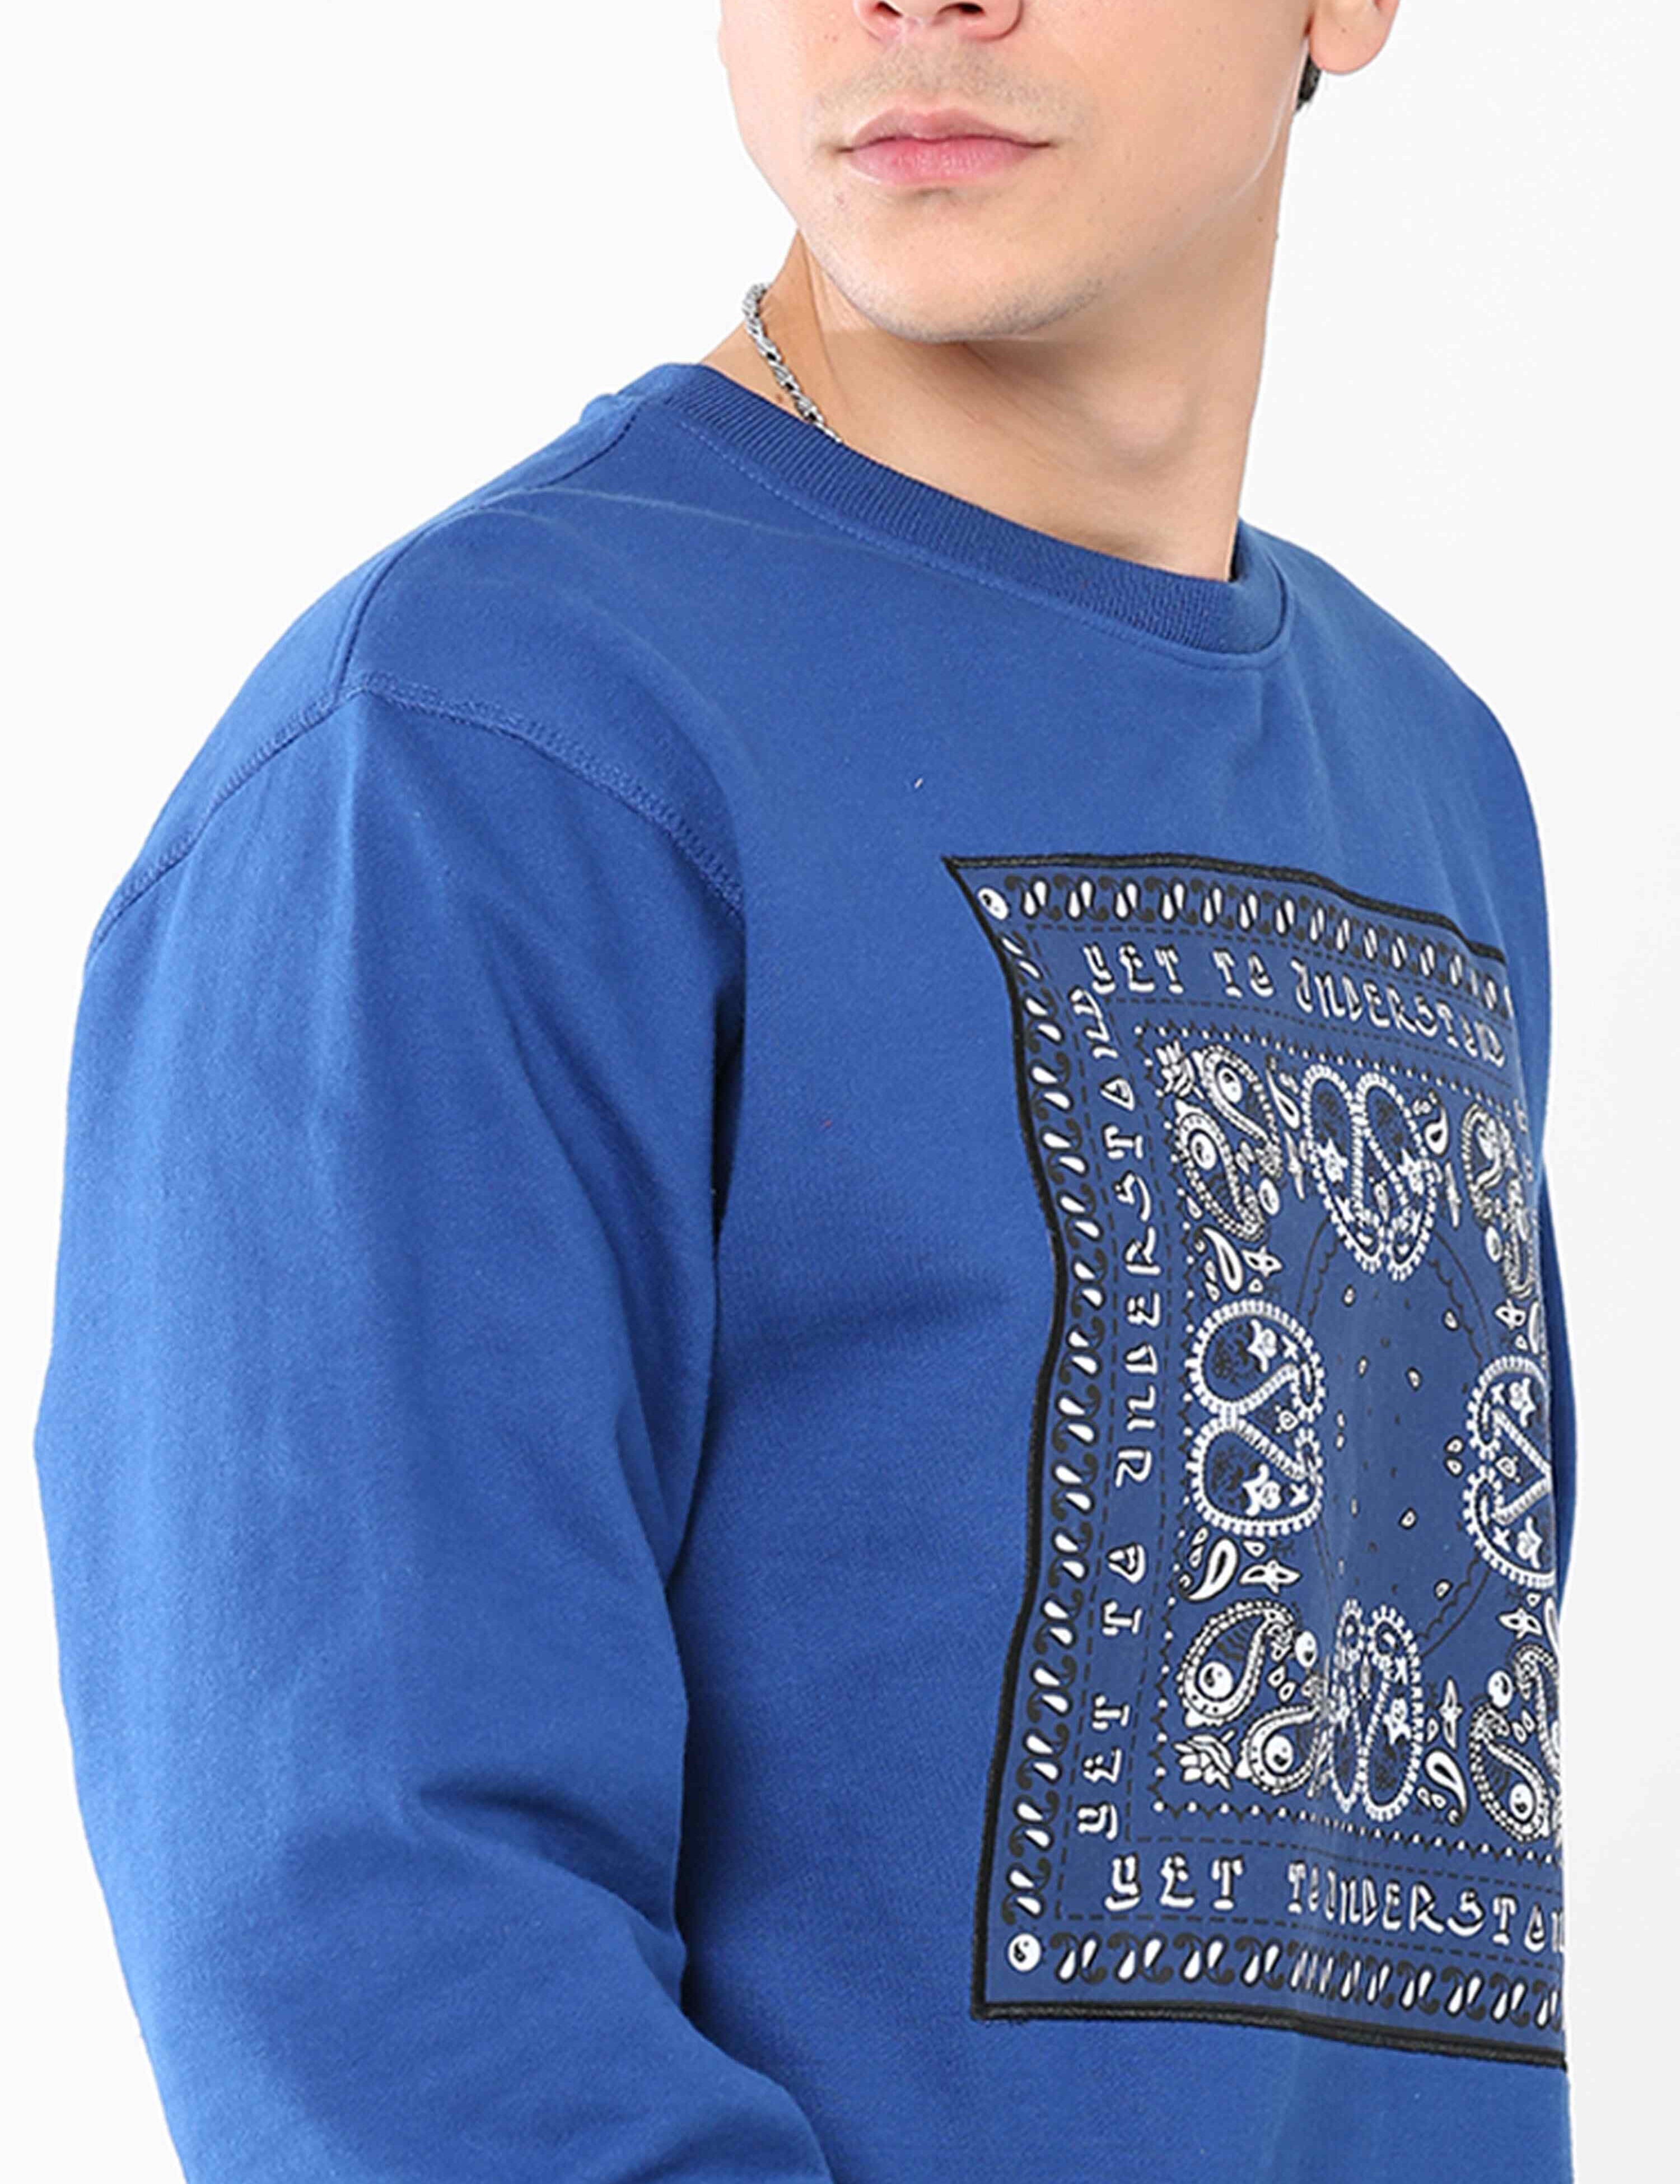 Blue Bandana Sweatshirt